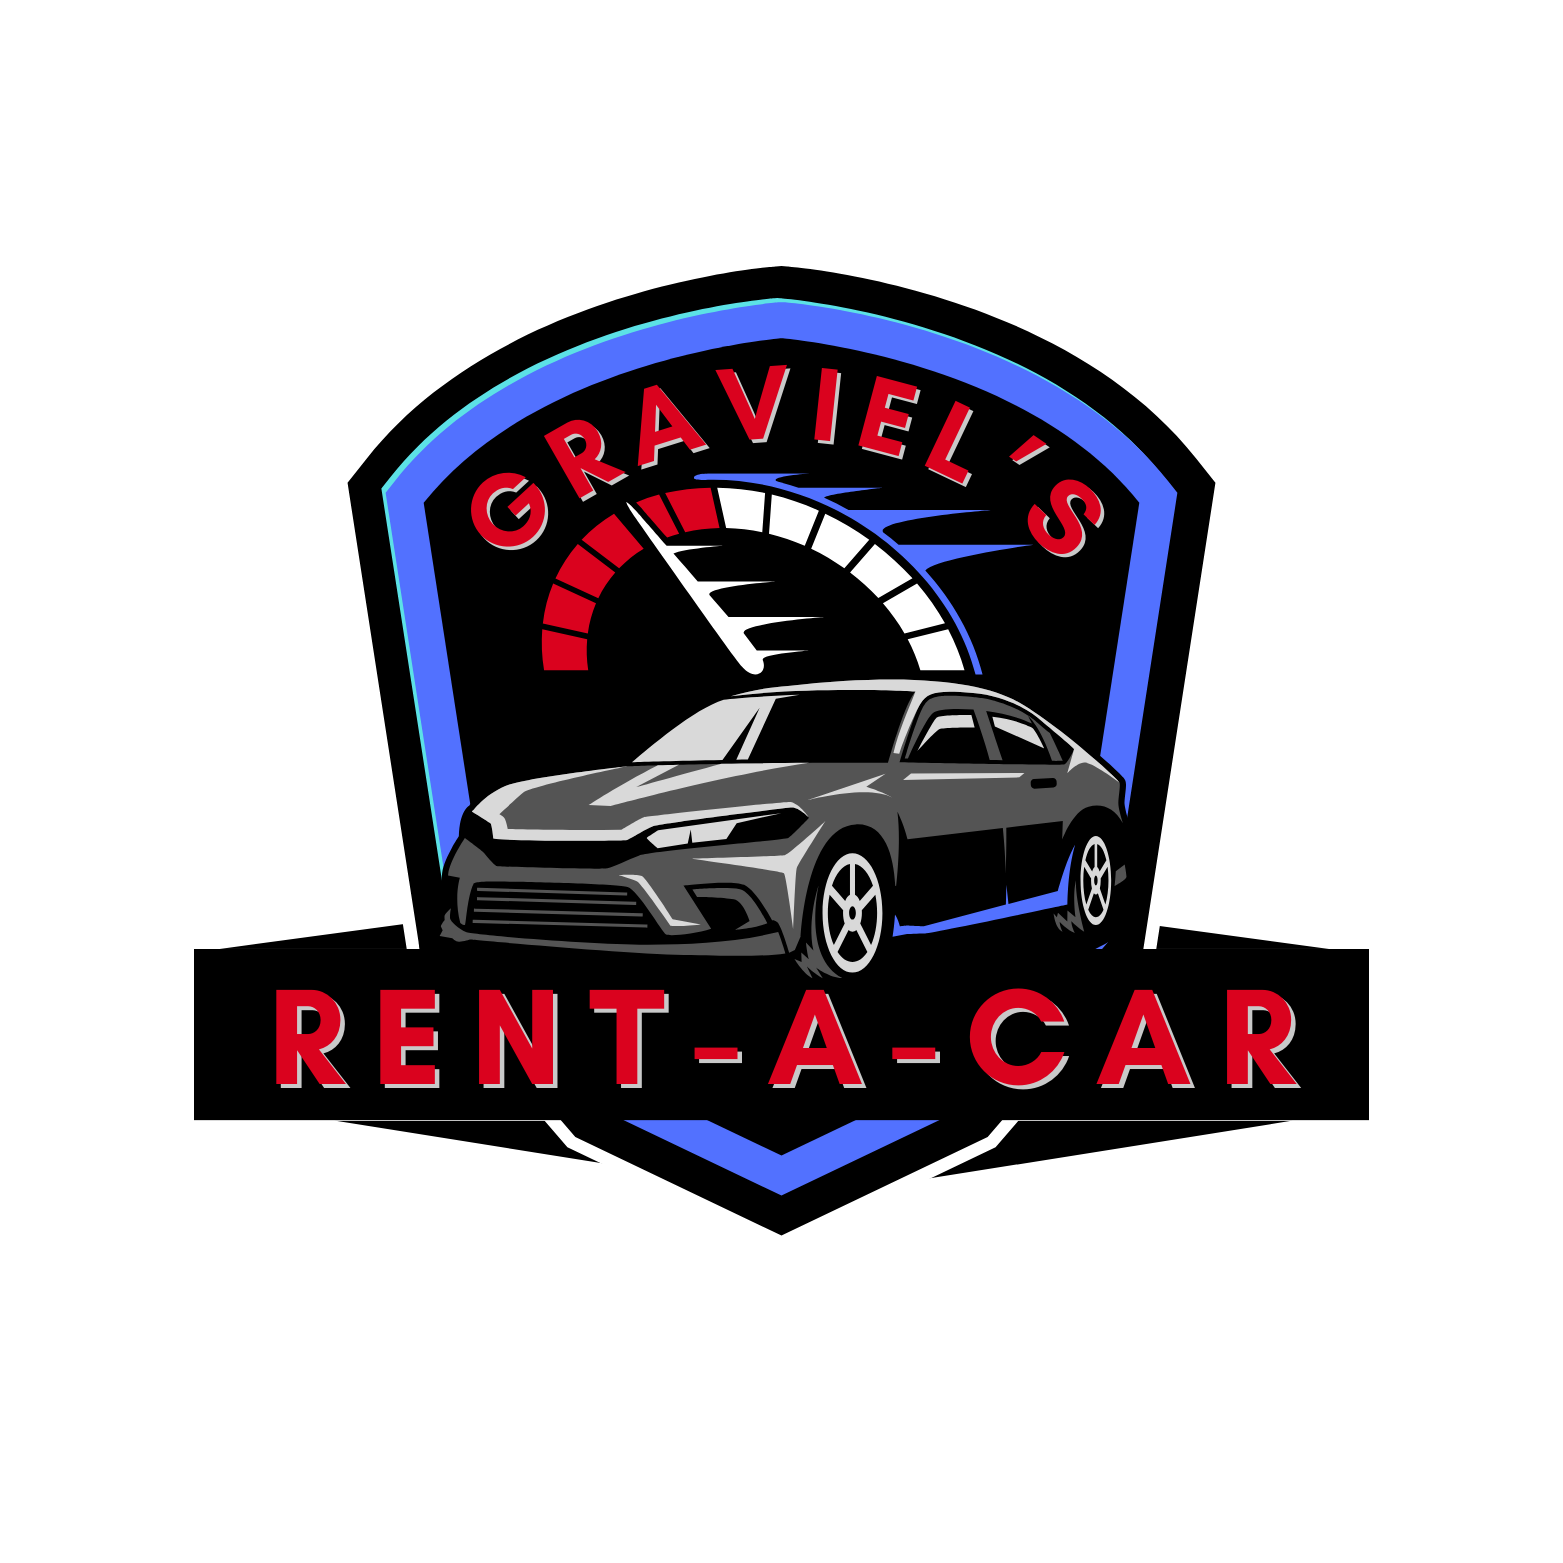 Graviel's Rent Car